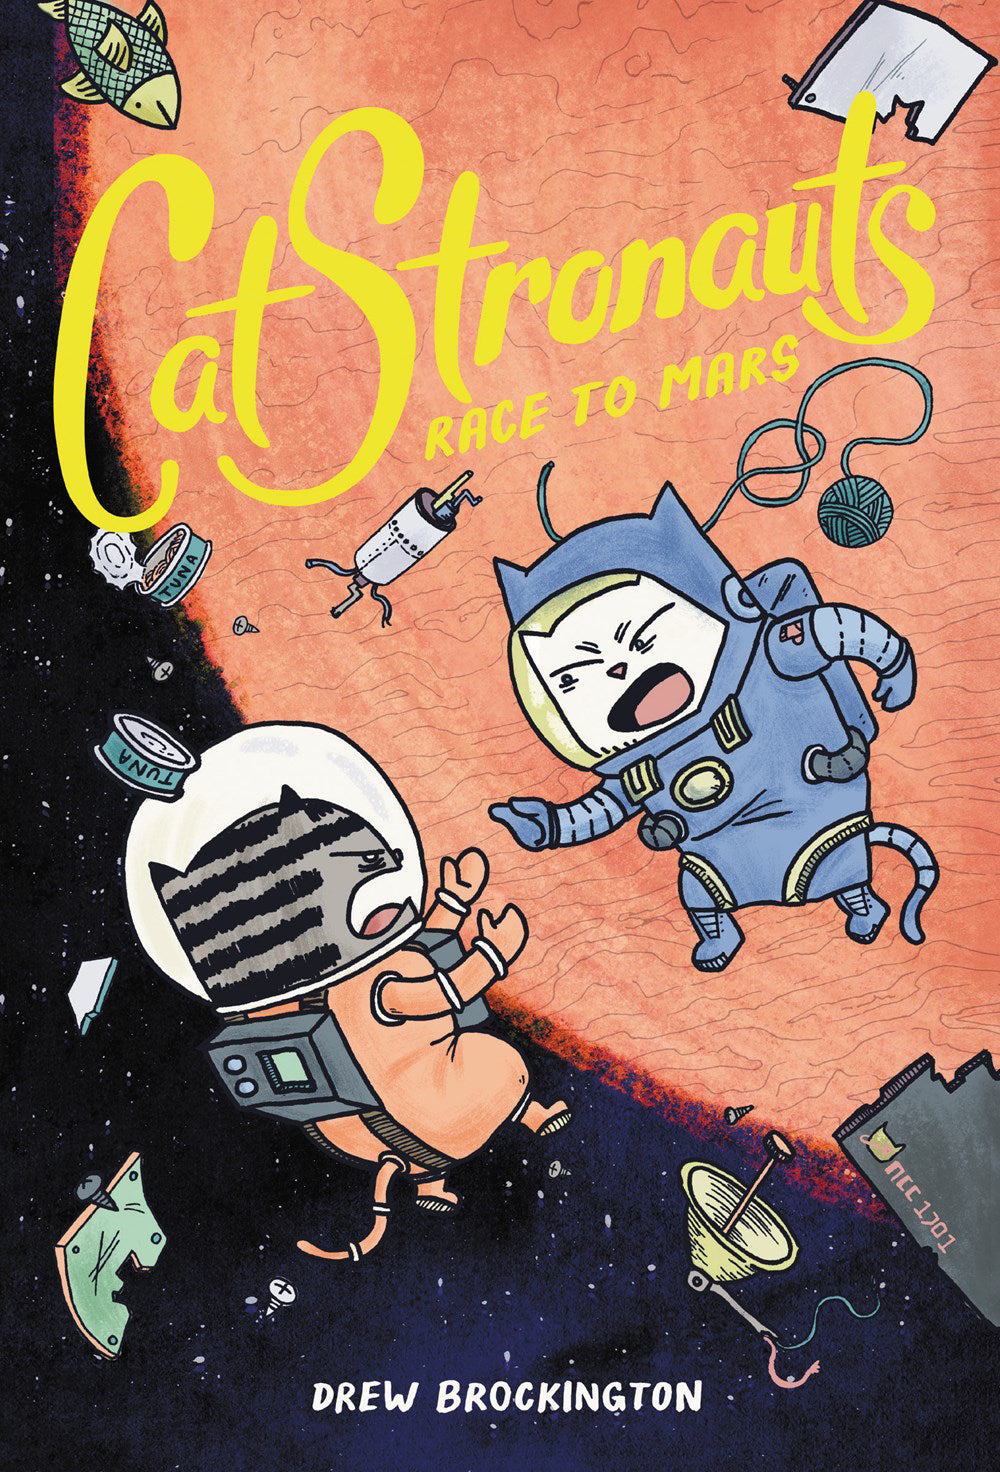 Catstronauts Yr Vol 02 Race To Mars